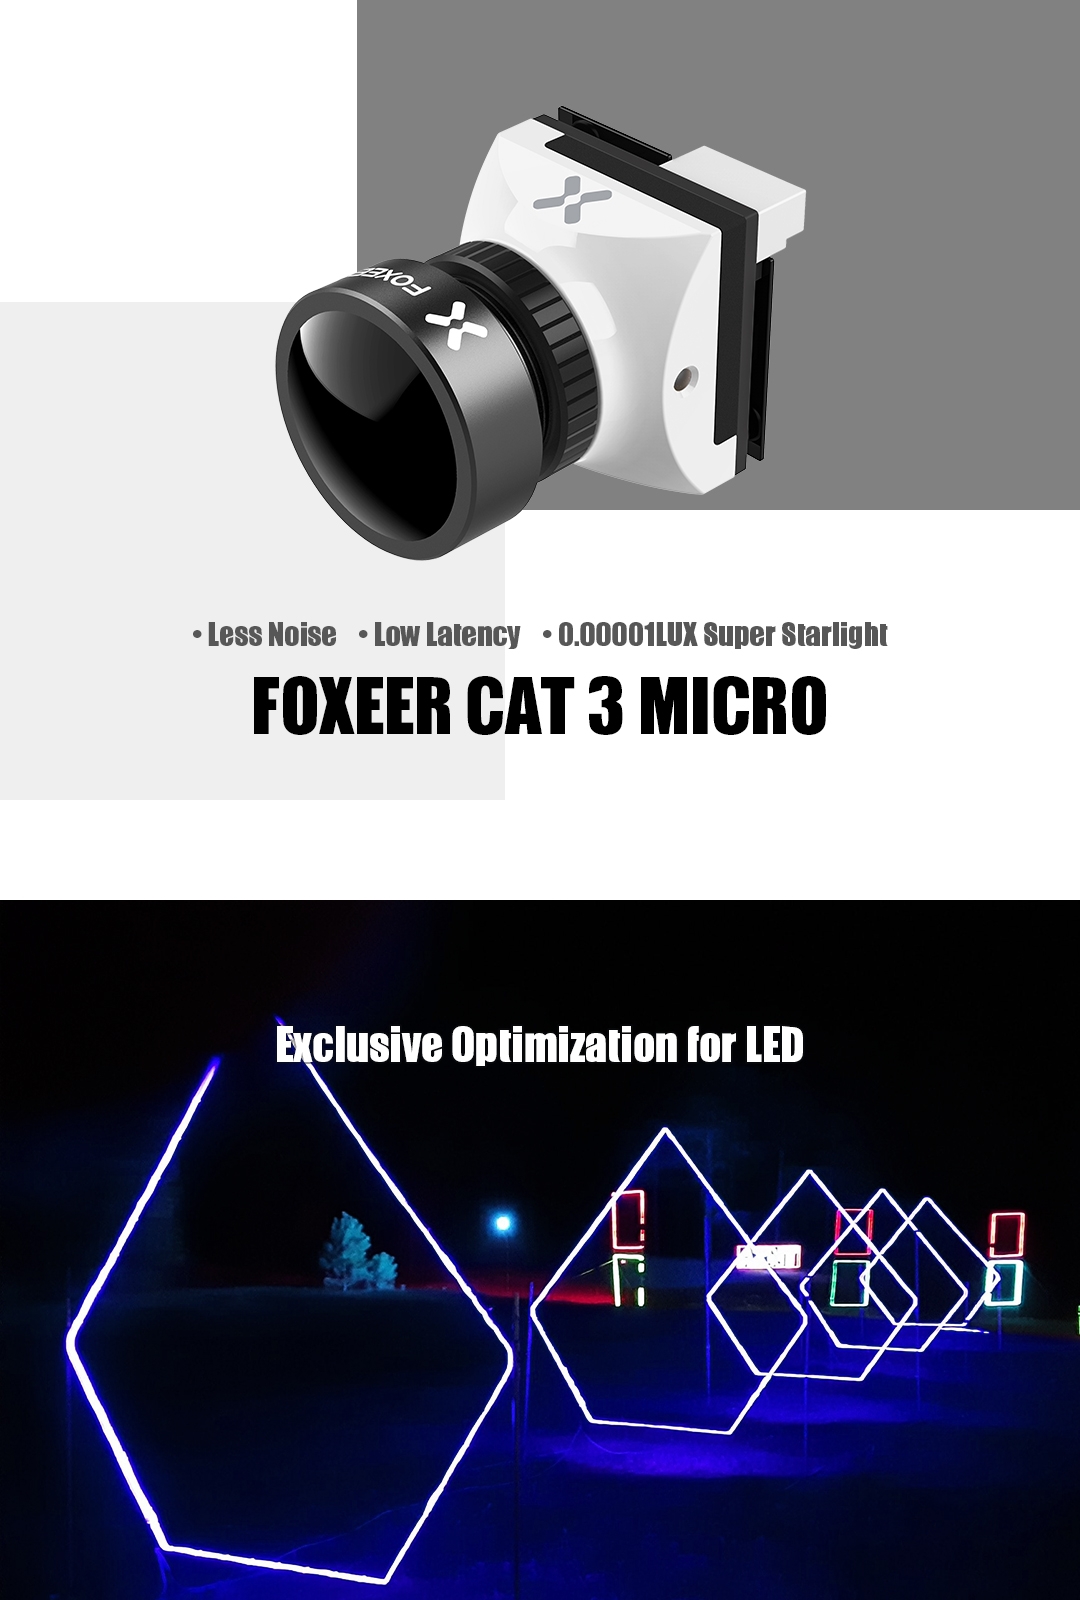 Foxeer Mini Cat 3 1200TVL 0.00001lux StarLight FPV Camera Support OSD & Menu Remote for FPV Racing RC Drone Black/Red